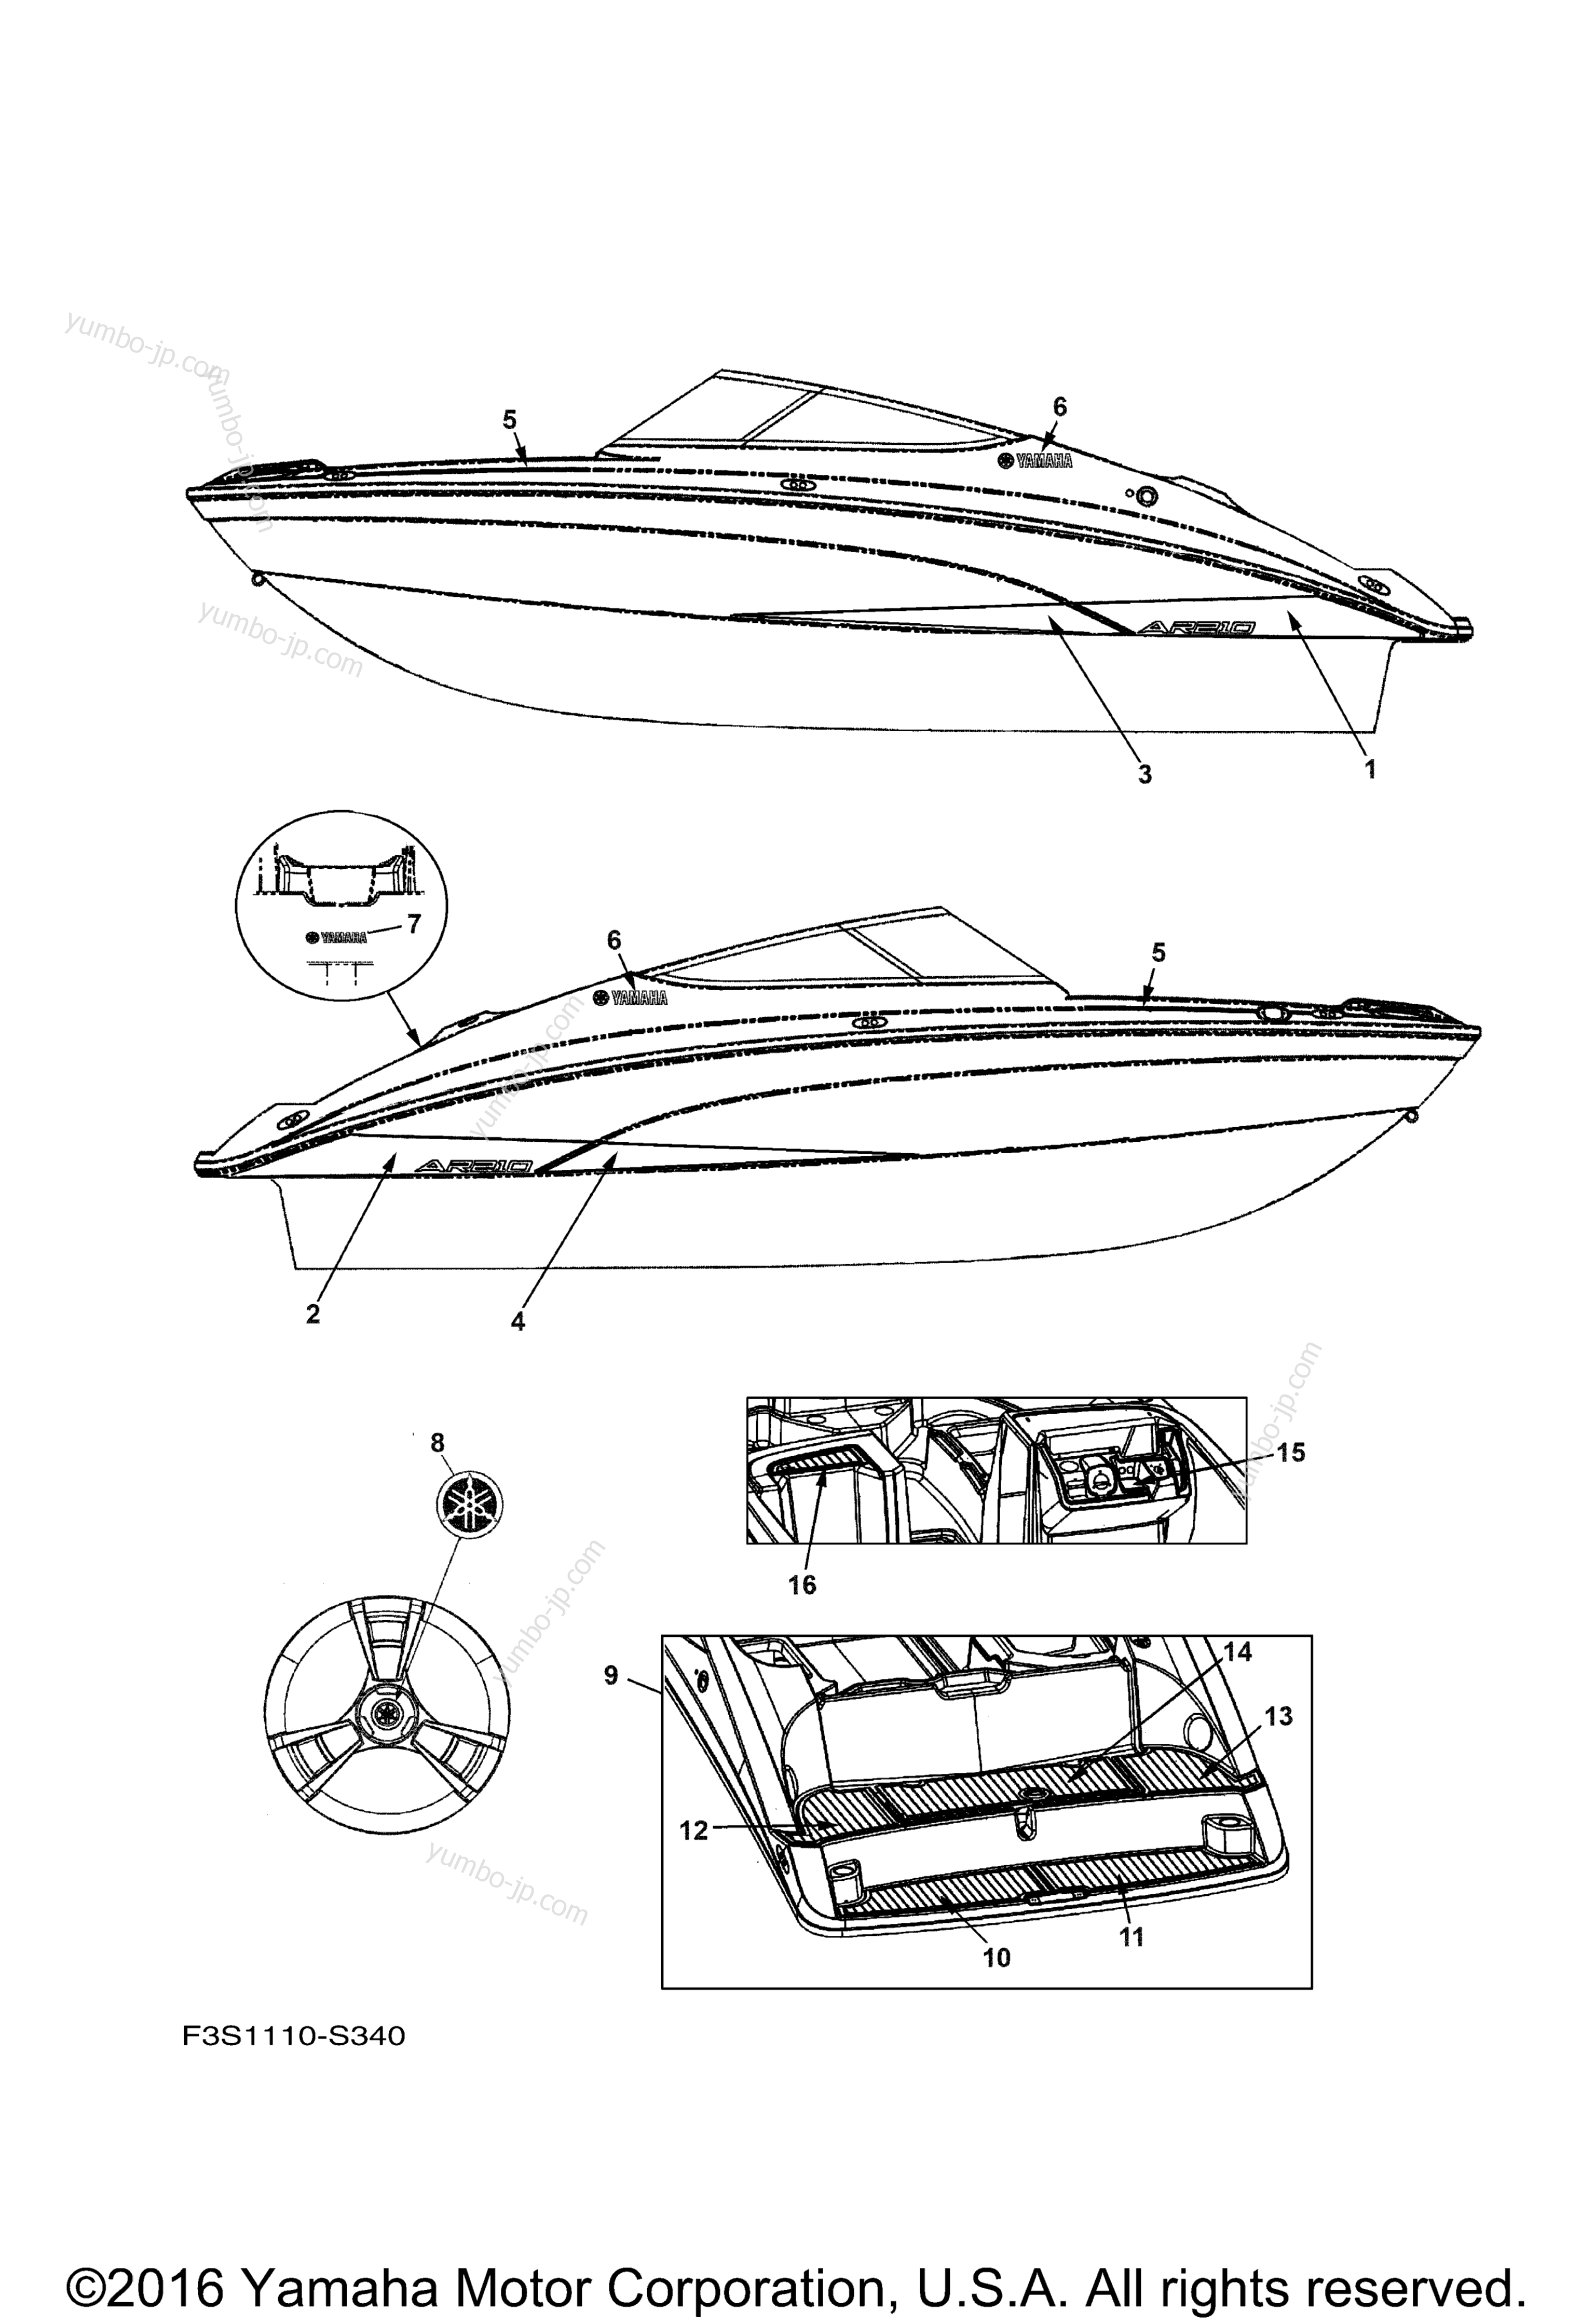 Graphics for boats YAMAHA AR190 (LBT1050AS) 2017 year